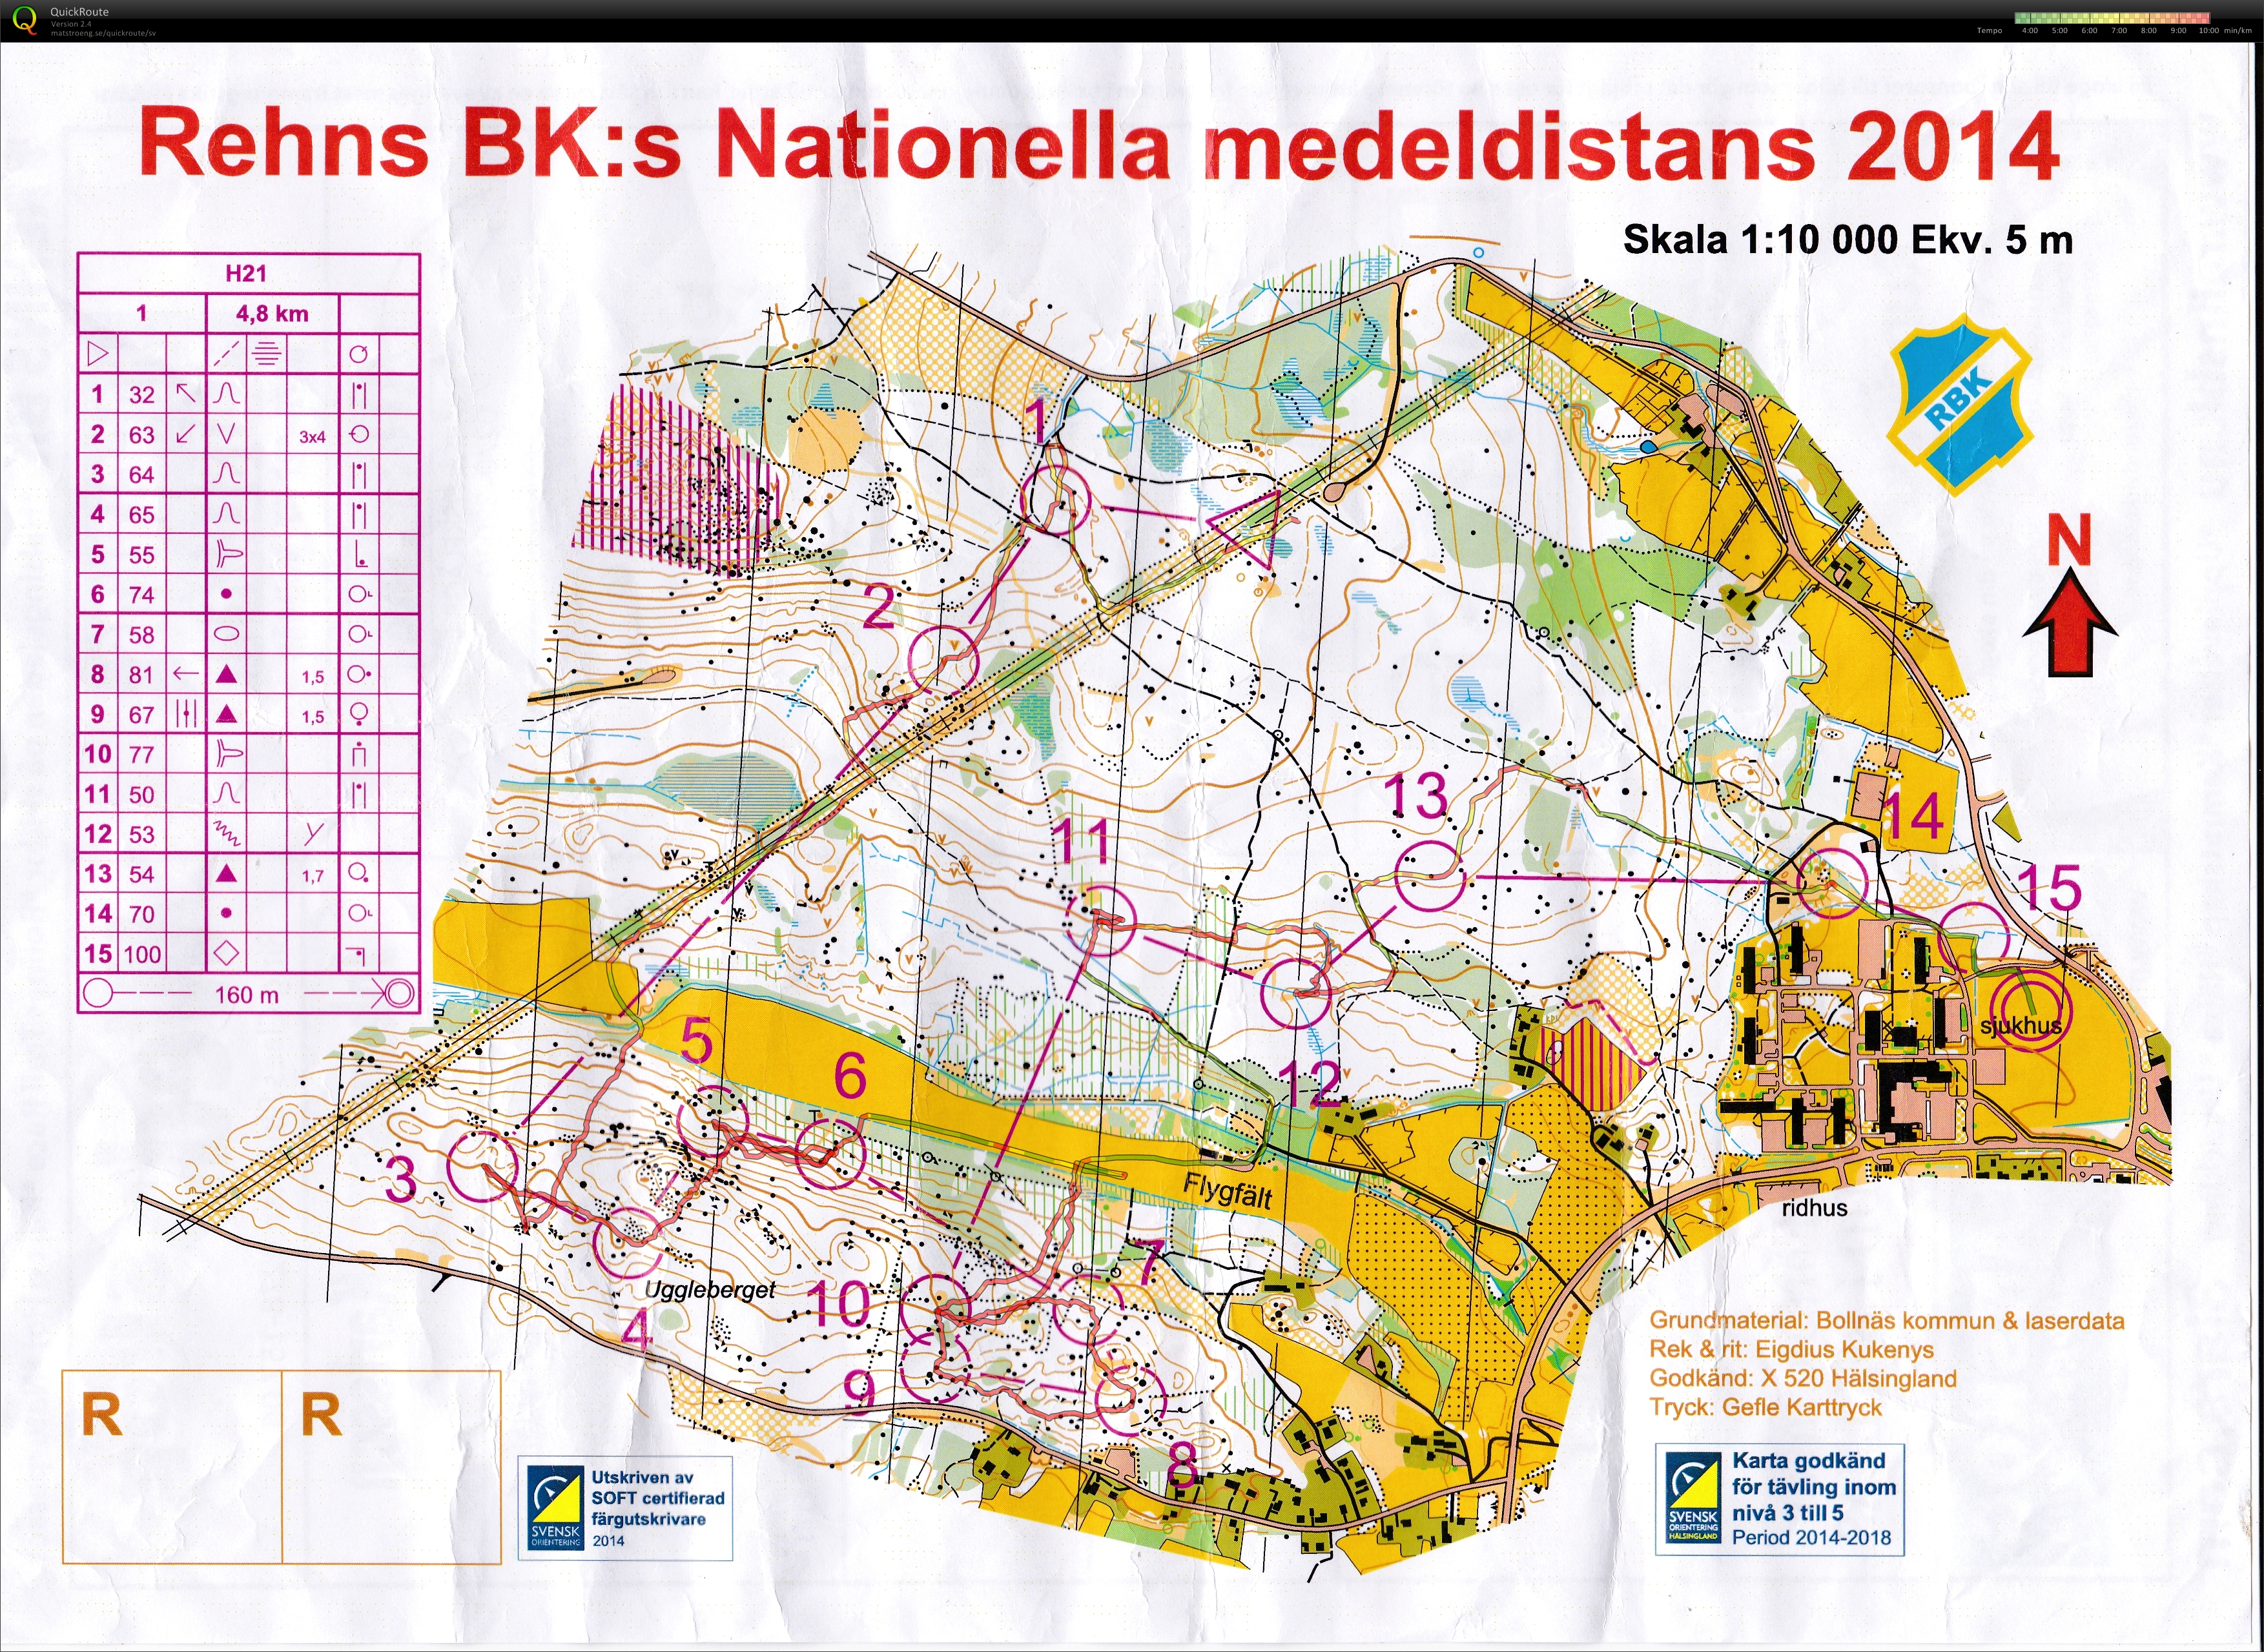 Rehns nationella medeldistans (31.05.2014)